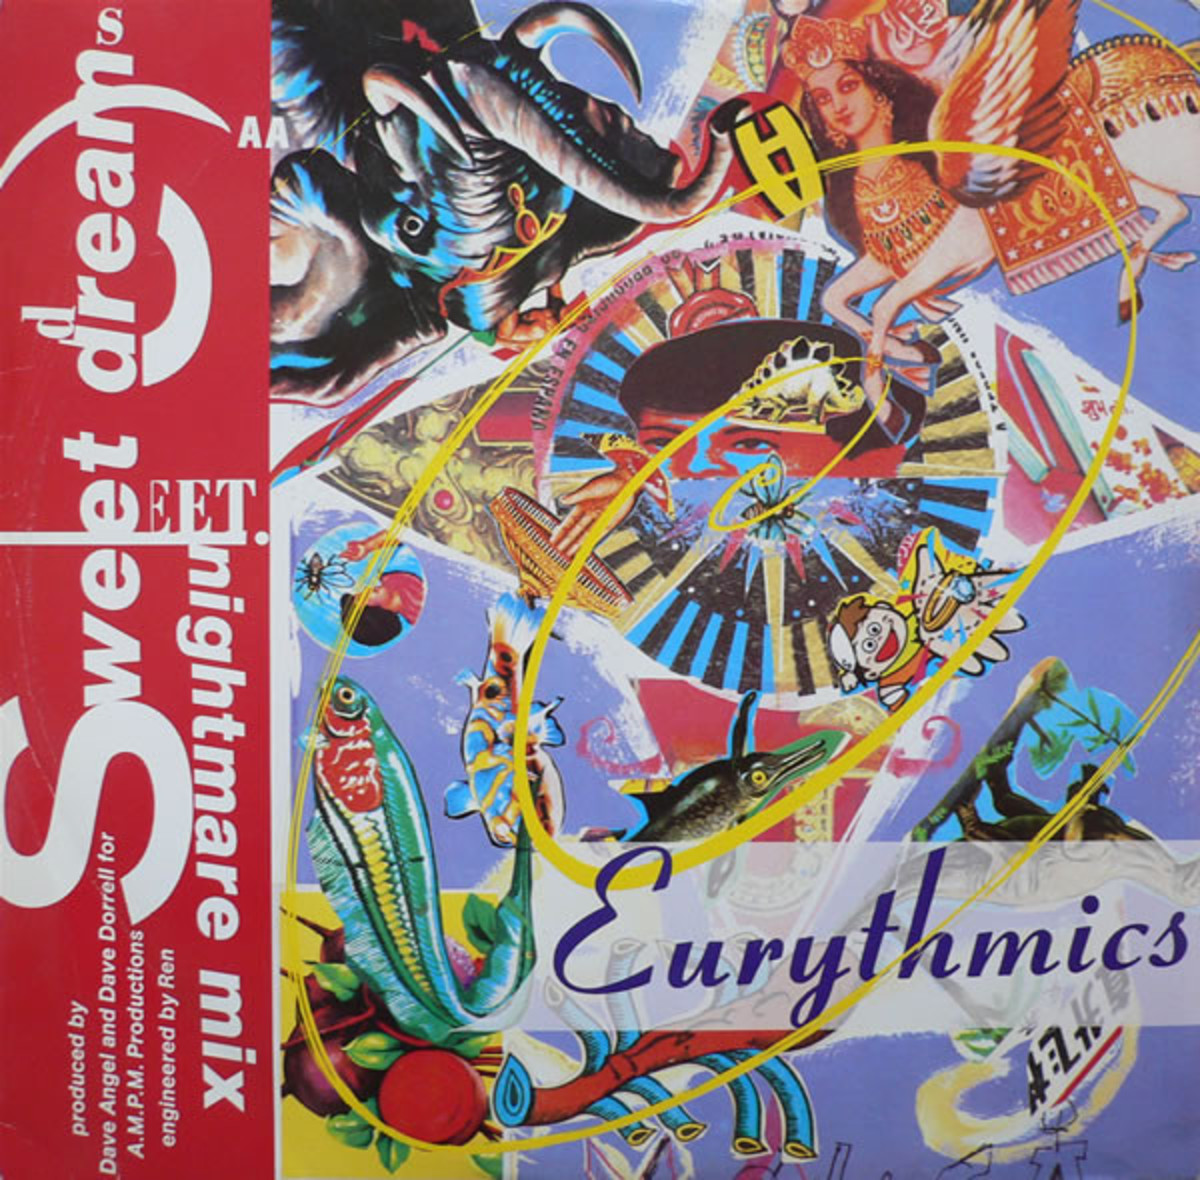 Eurythmics - “Sweet Dreams” (Dave Angel Nightmare Mix) | 1990